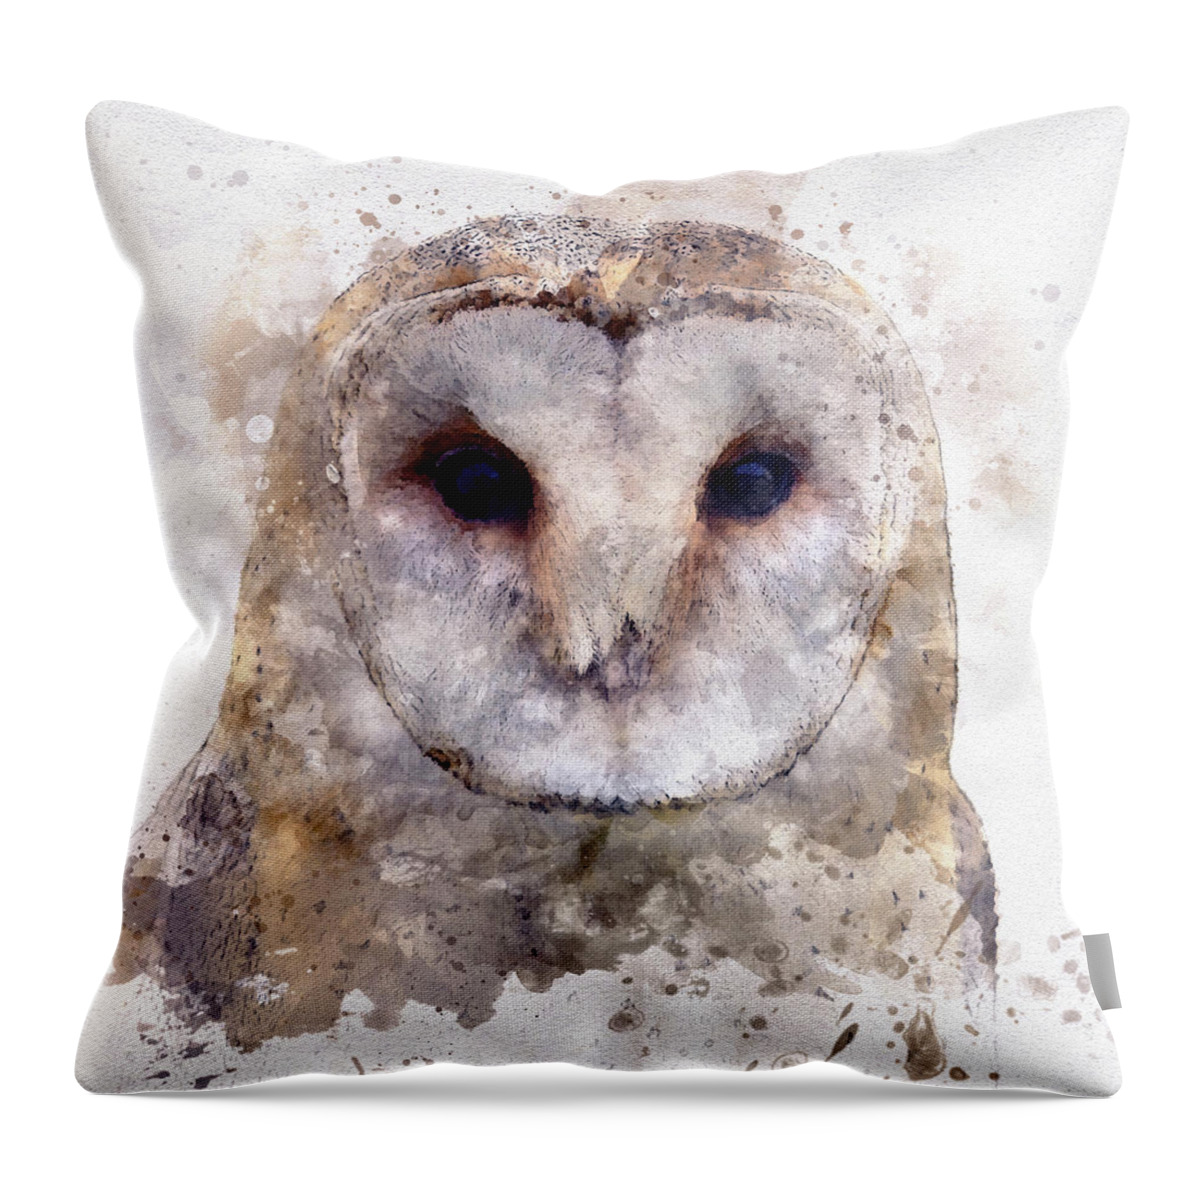 Barn Owl In Watercolor Throw Pillow featuring the digital art Barn Owl in Watercolor by Susan Maxwell Schmidt